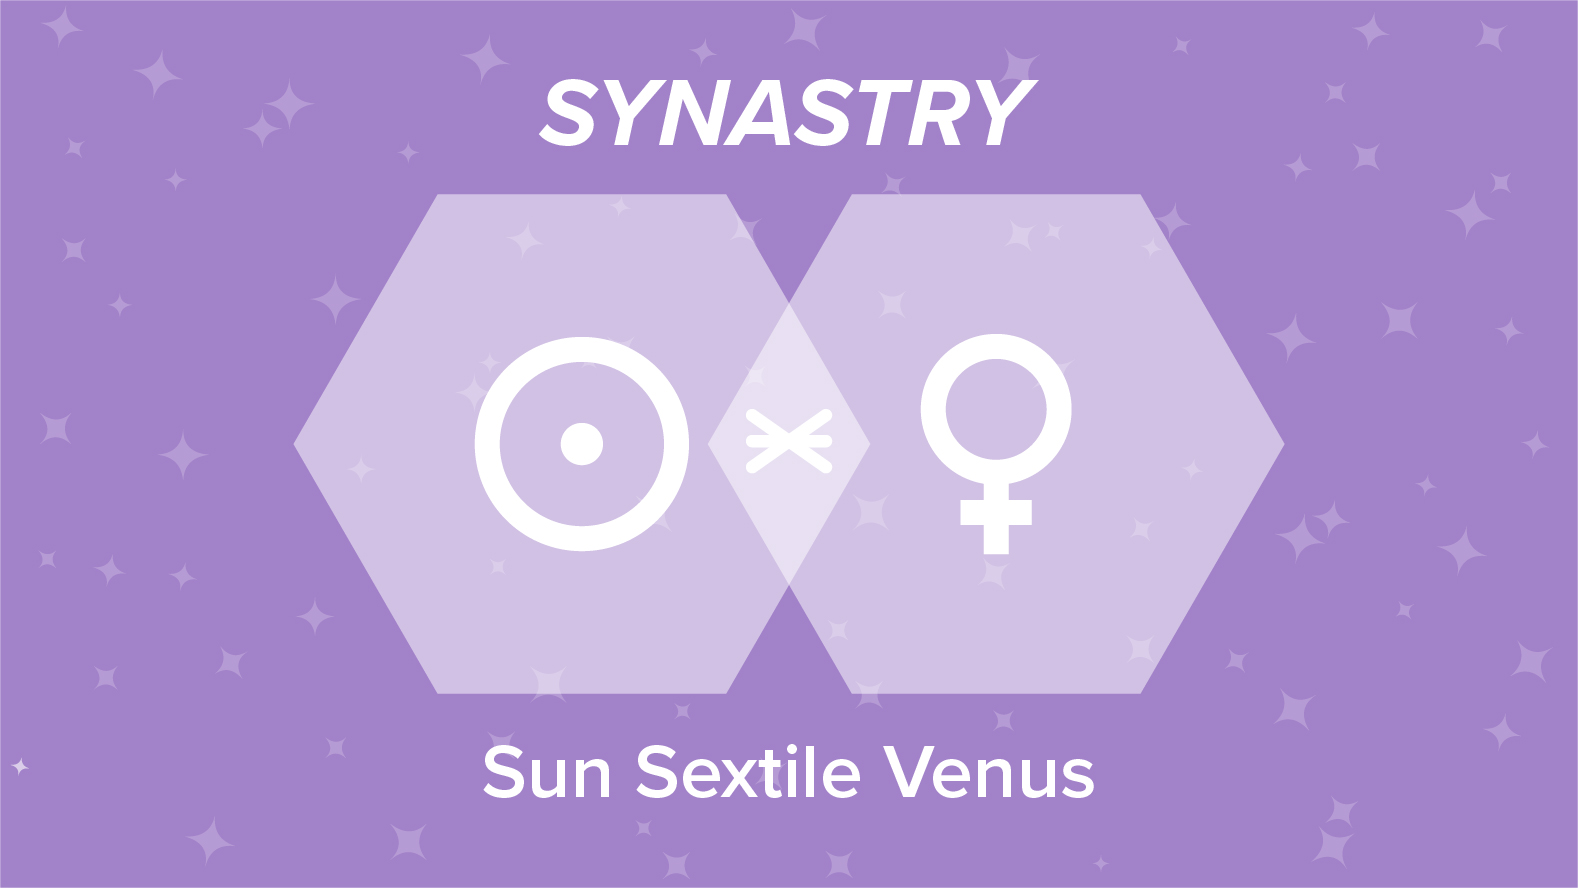 Sun Sextile Venus Synastry